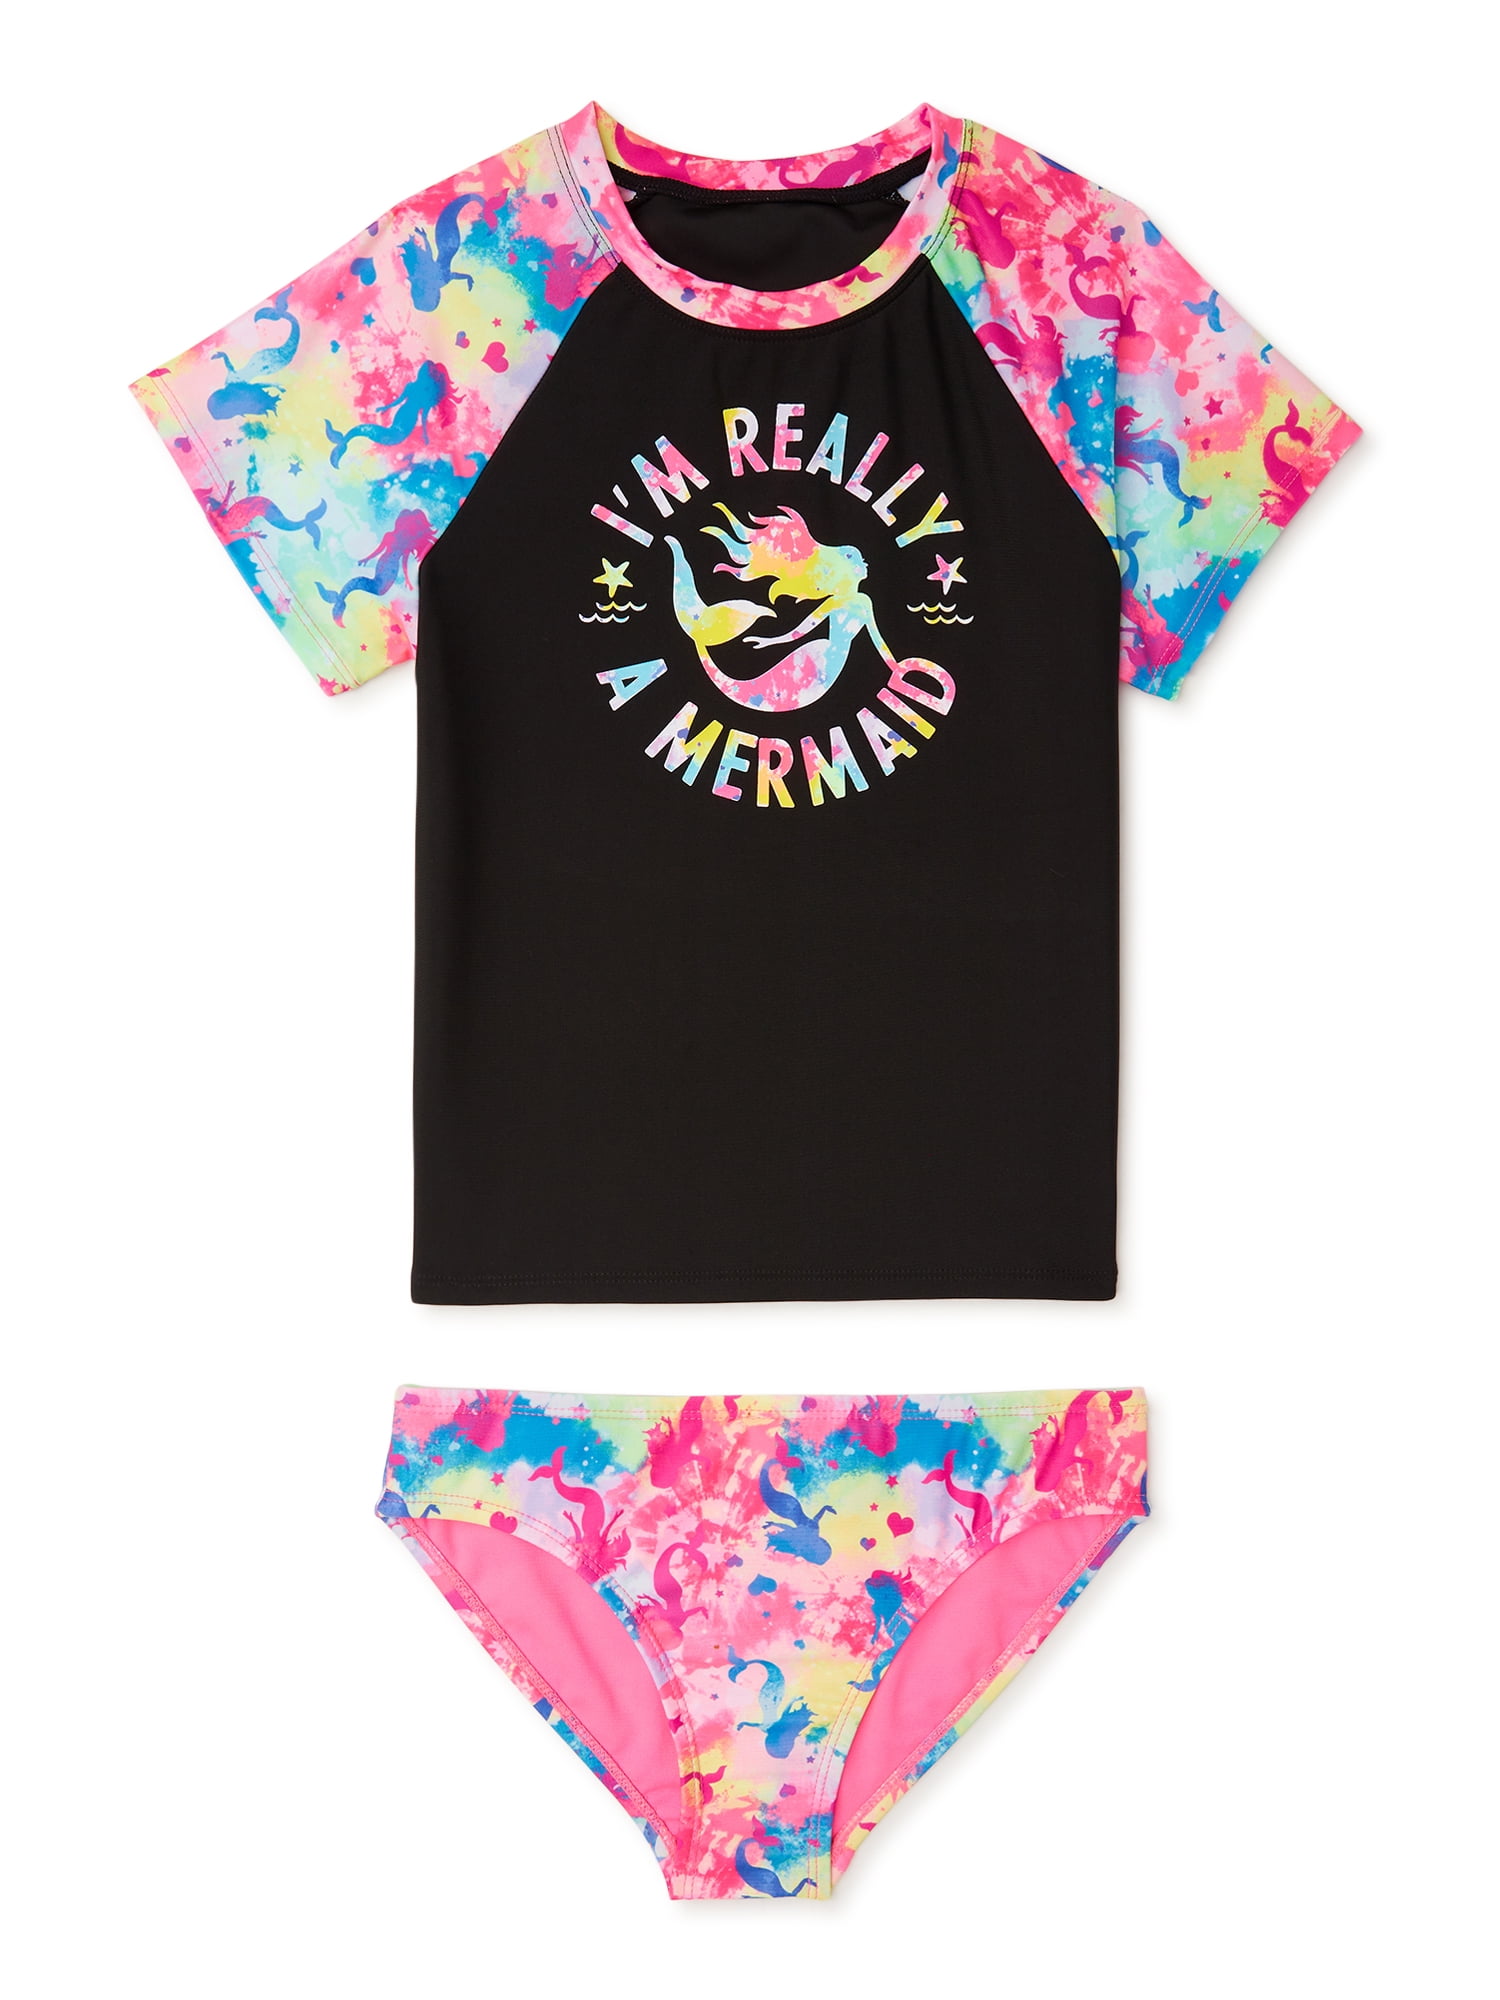 Size 14/16 UV Protective Rash Guard Set for Girls Dayu Kids Two Piece Swimsuits UPF 50 Hot Pink